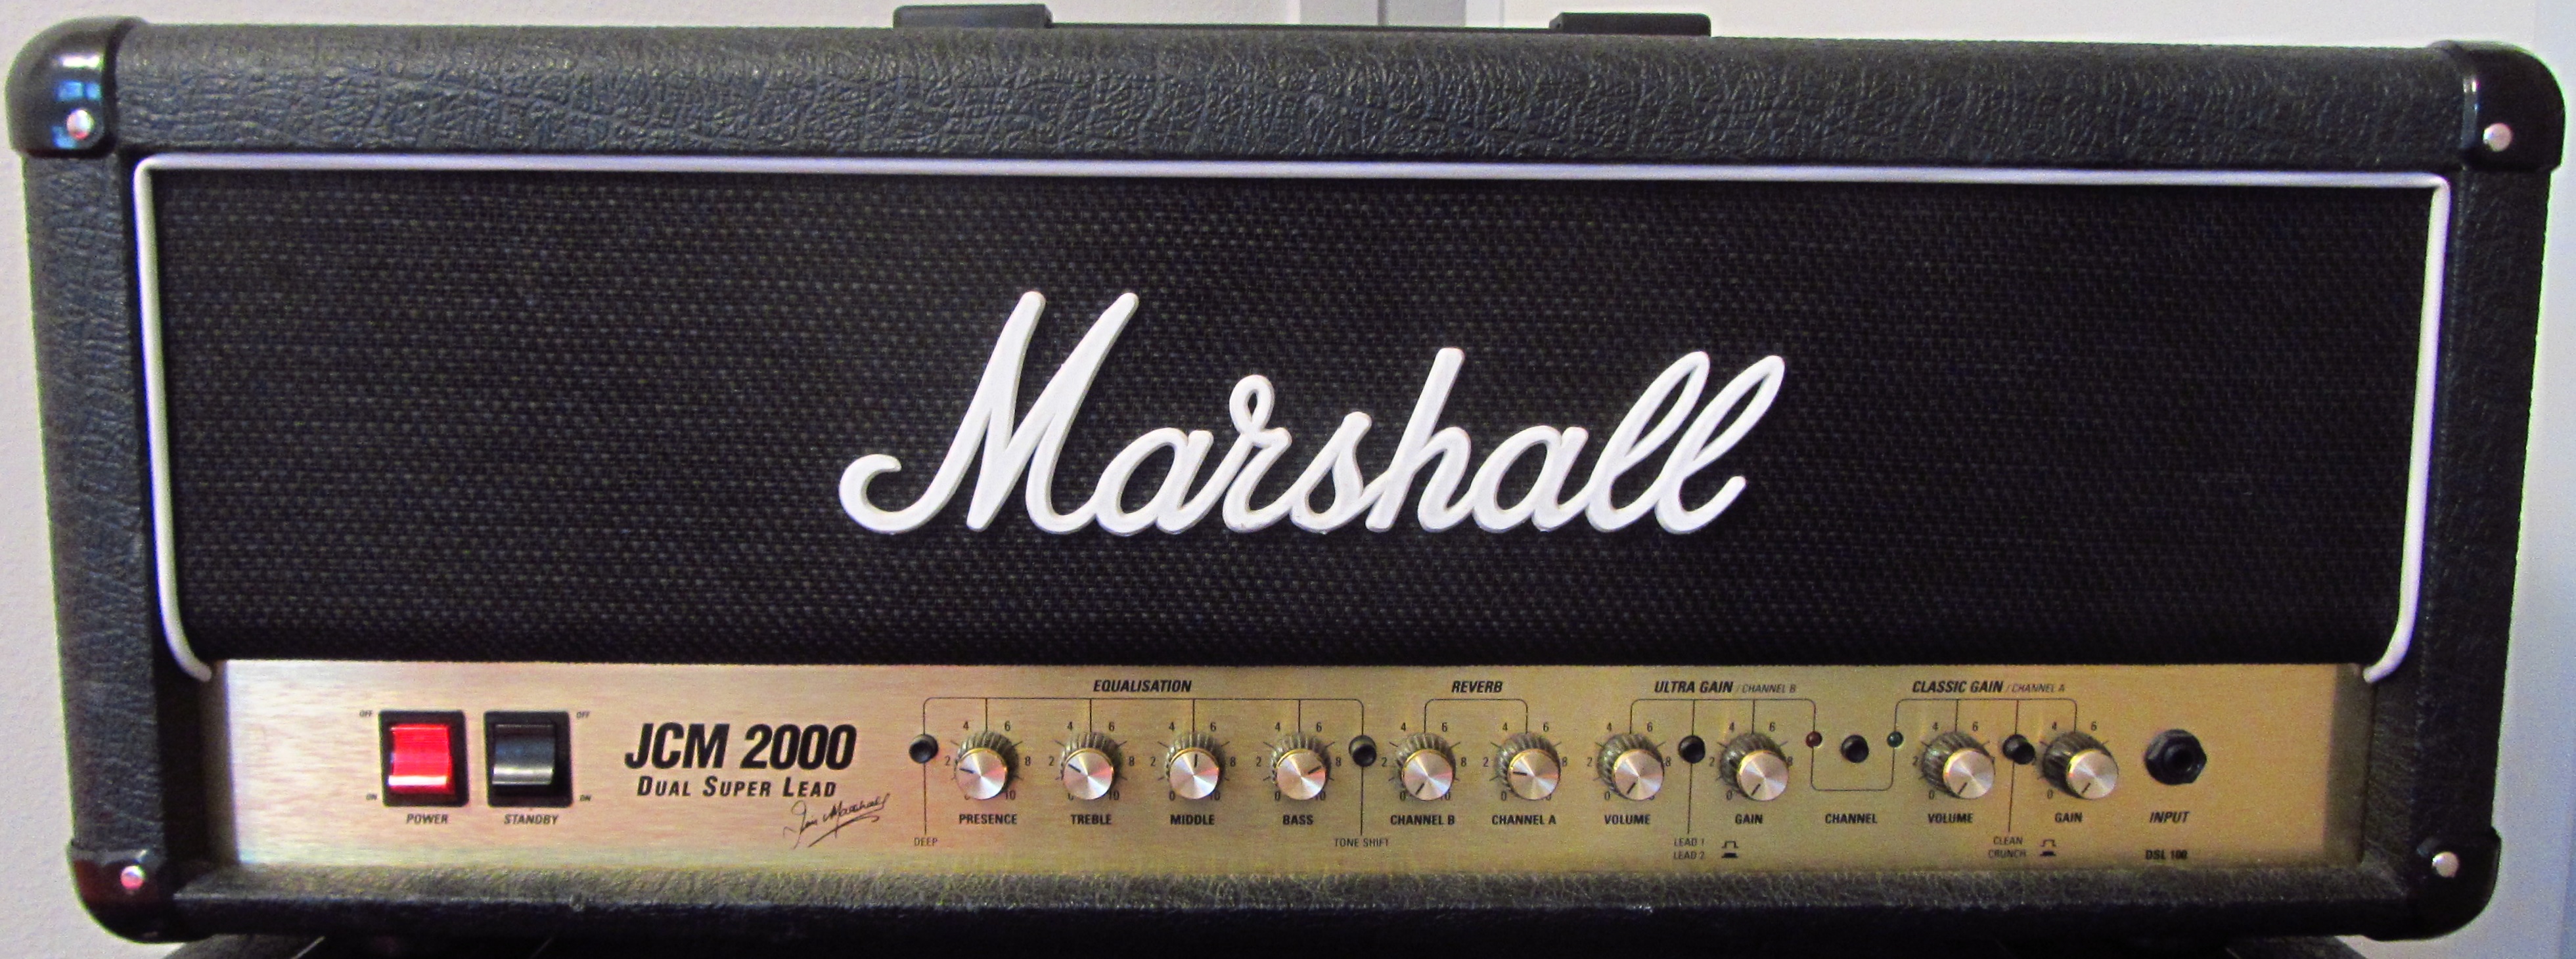 DSL100 - Marshall DSL100 - Audiofanzine